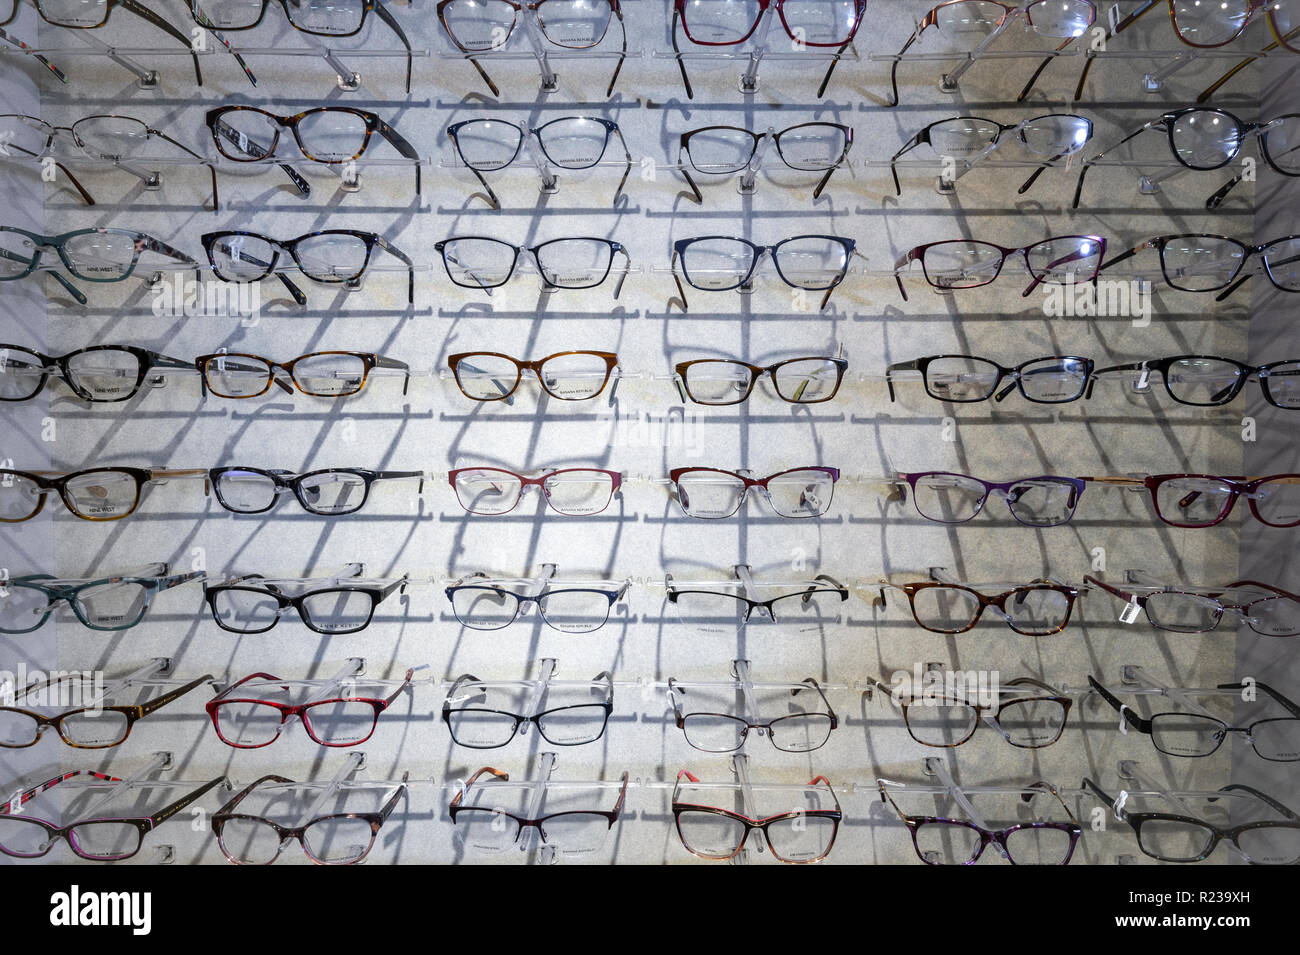 Eyeglass Display In Eye Doctor's Office Stock Photo